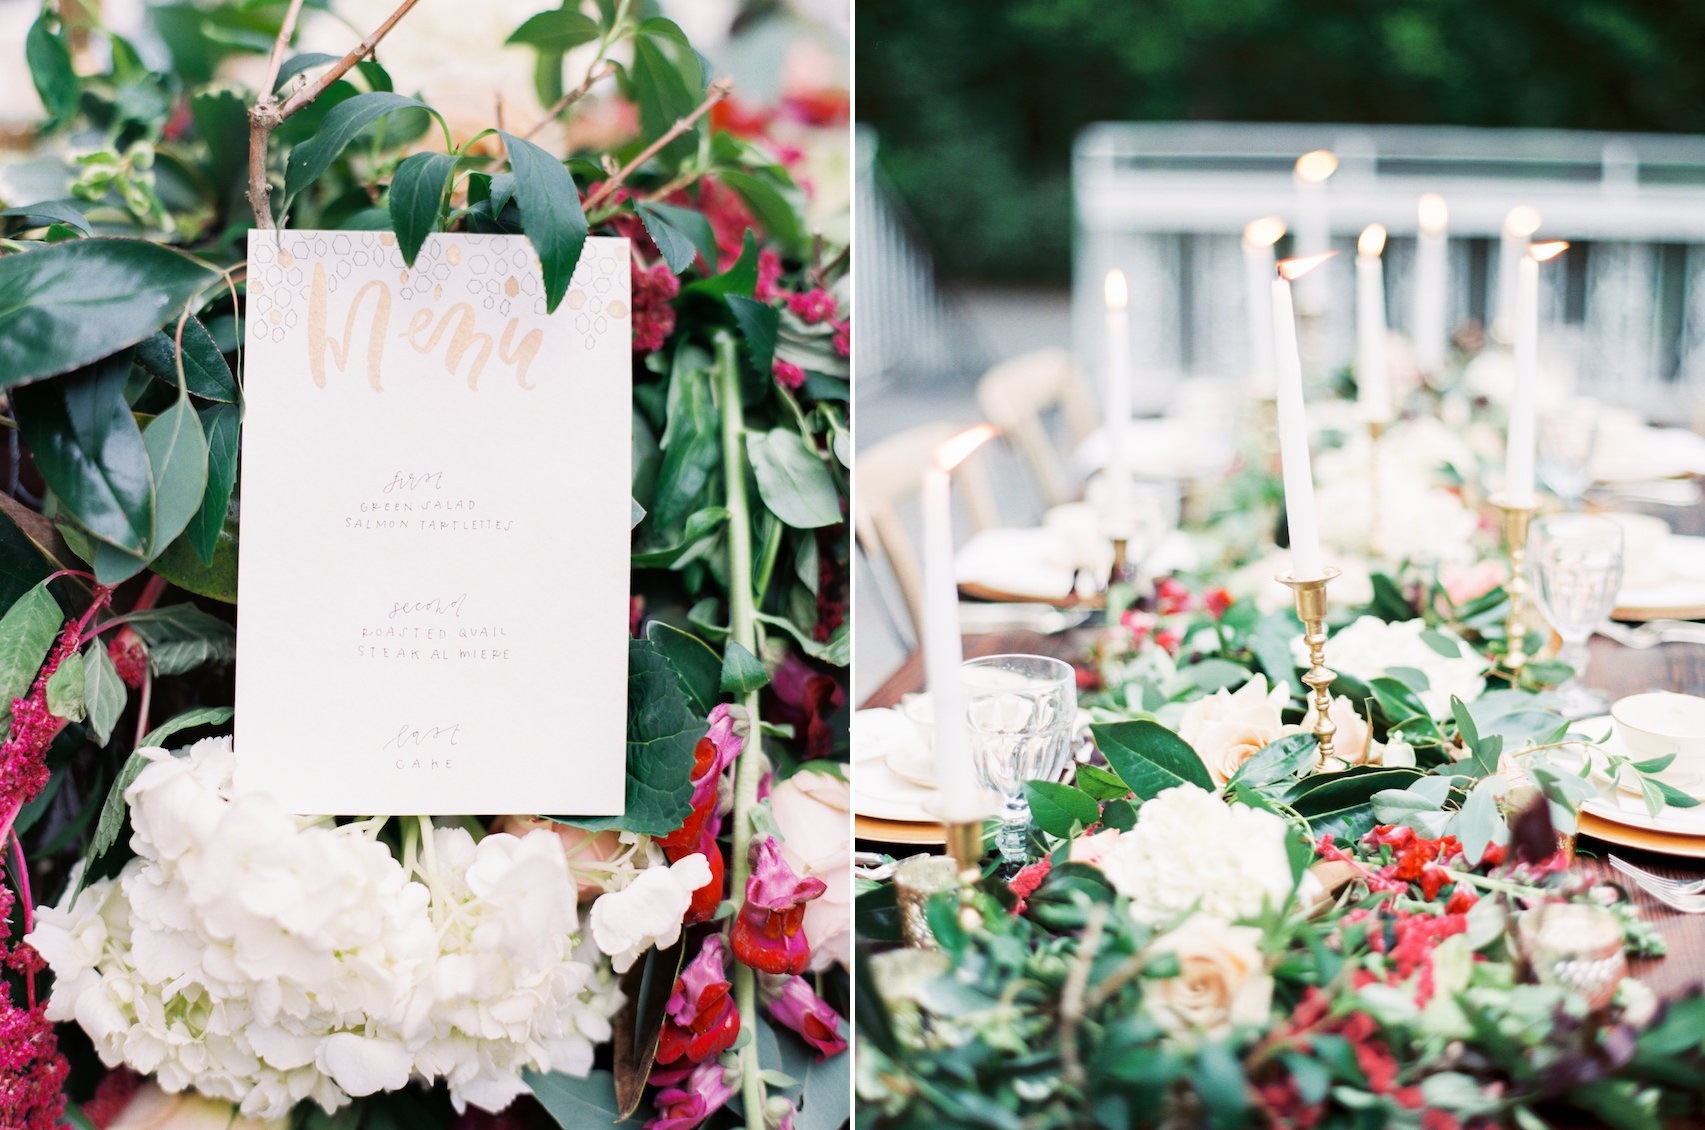 Romantic Wedding Table Menu & Candle Centerpiece